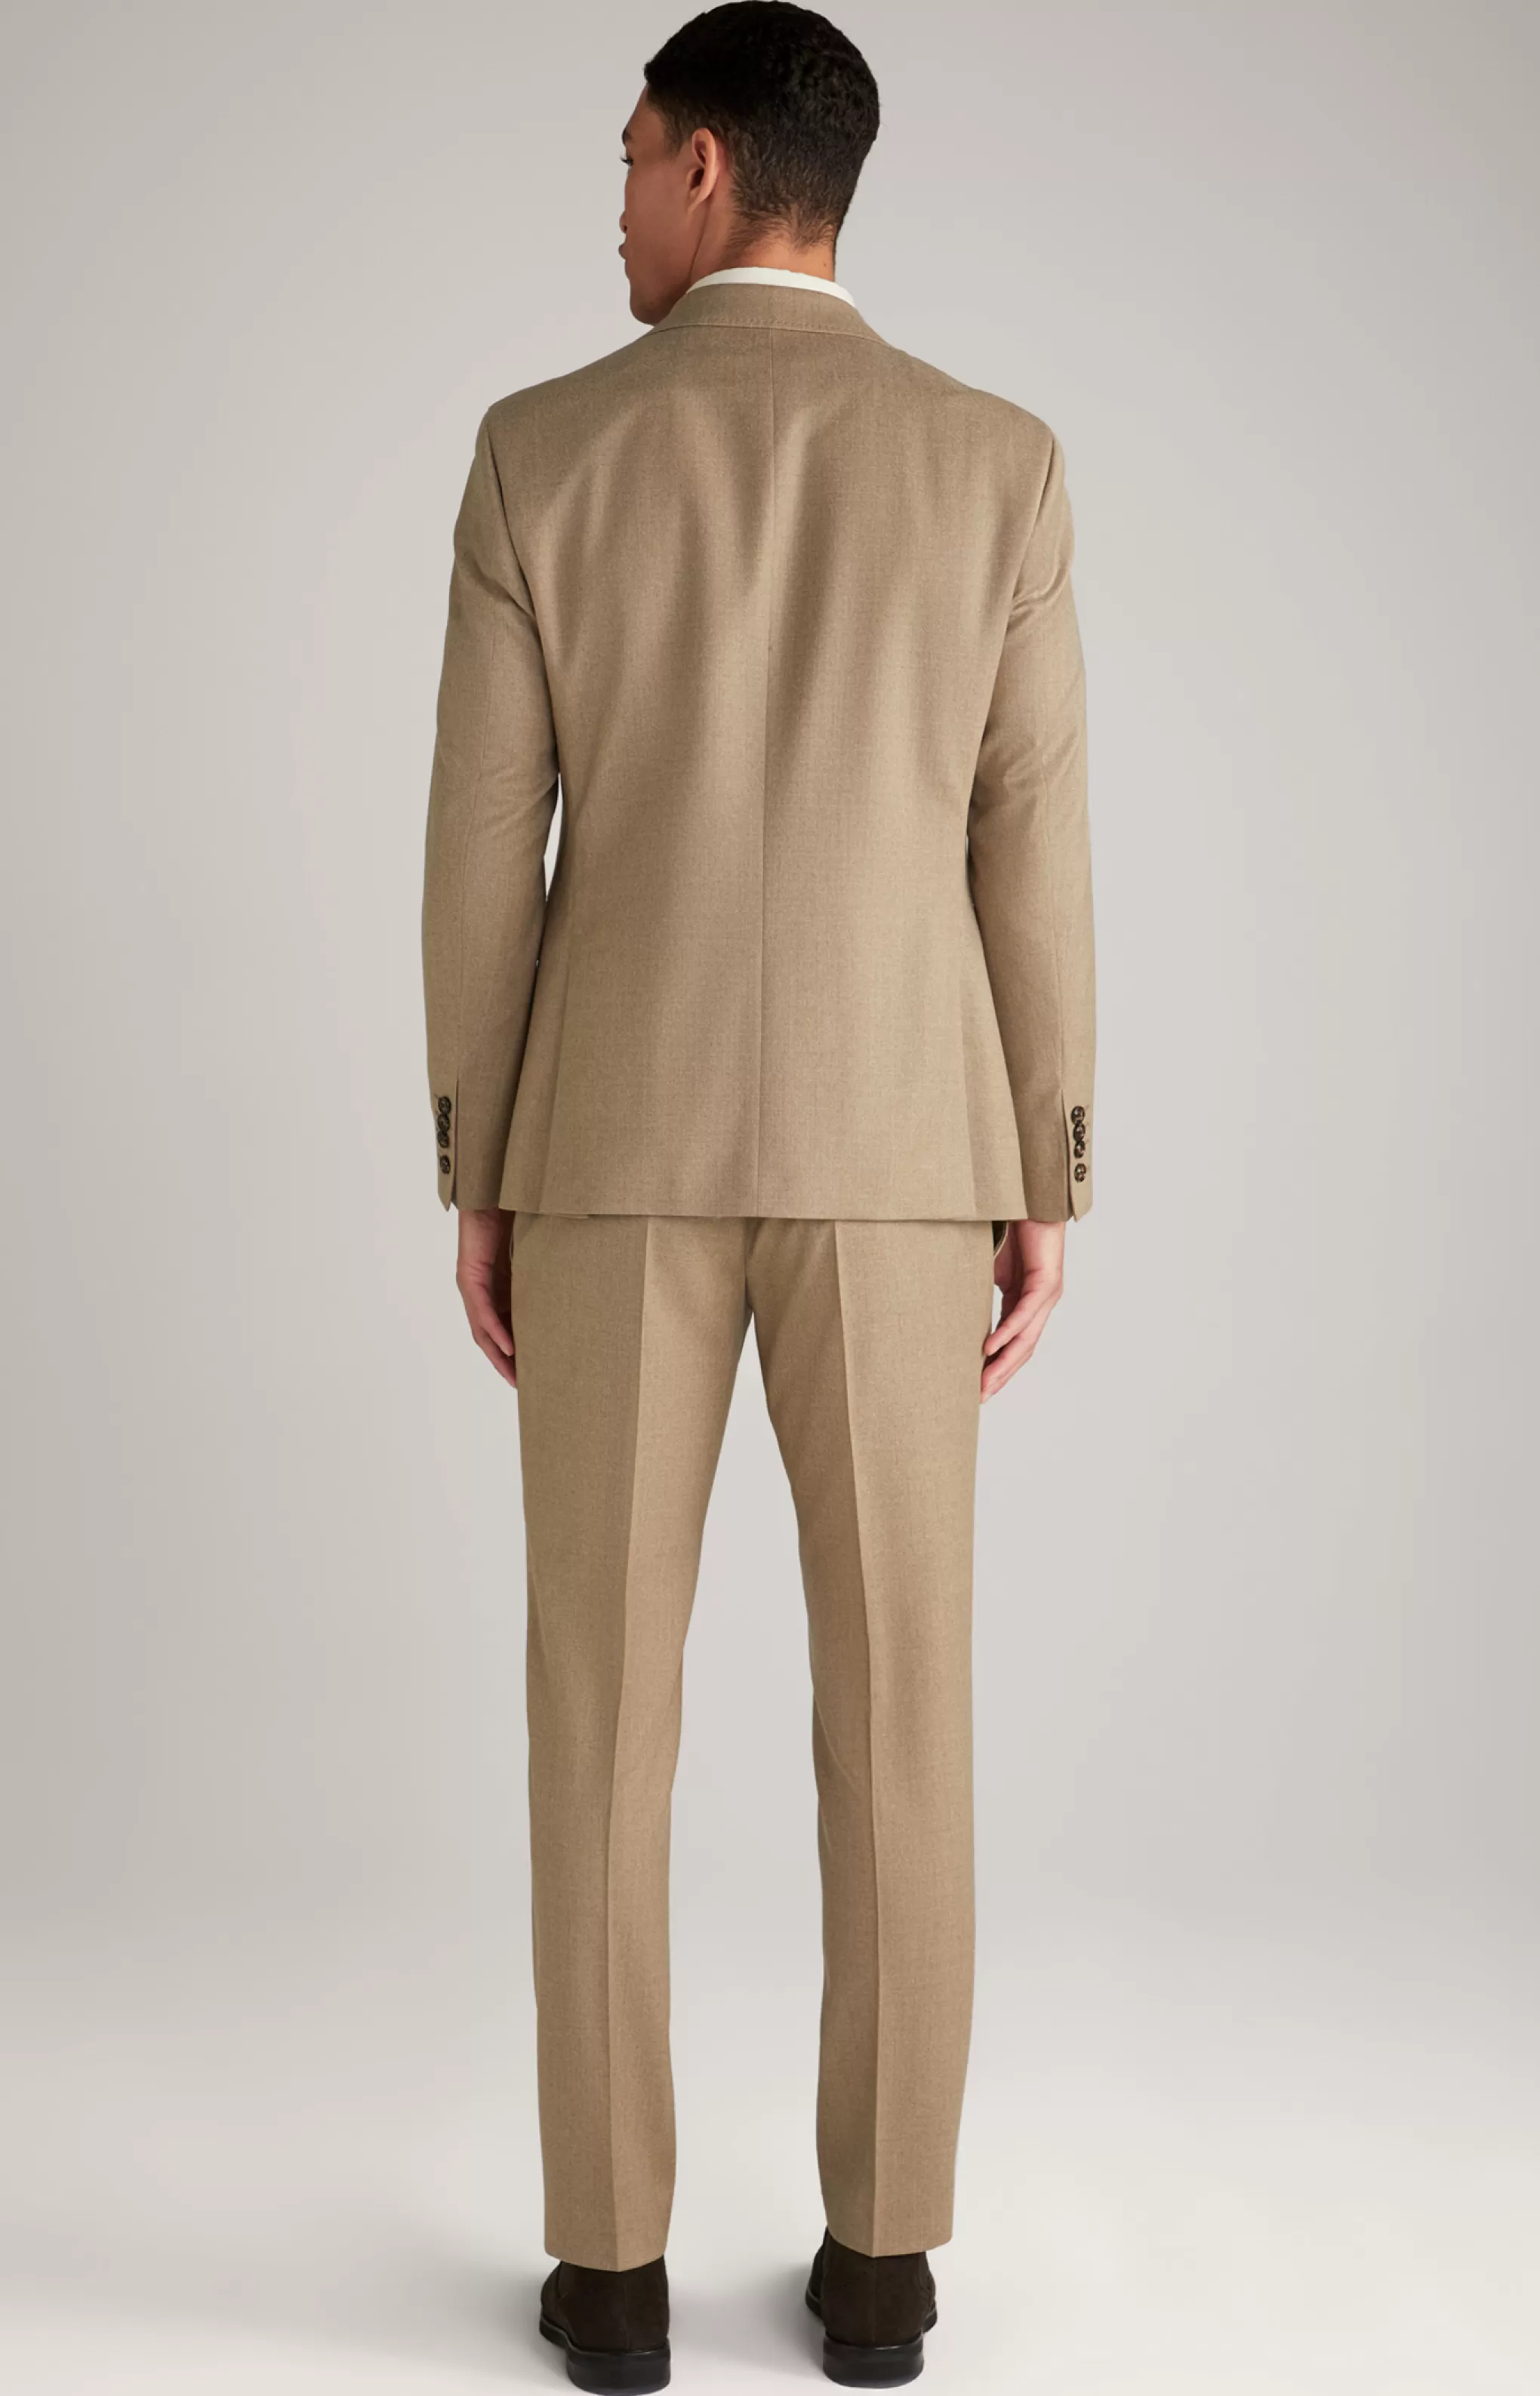 Suits | Clothing*JOOP Suits | Clothing Haspar-Bloom Suit in Flecked Grey mélange